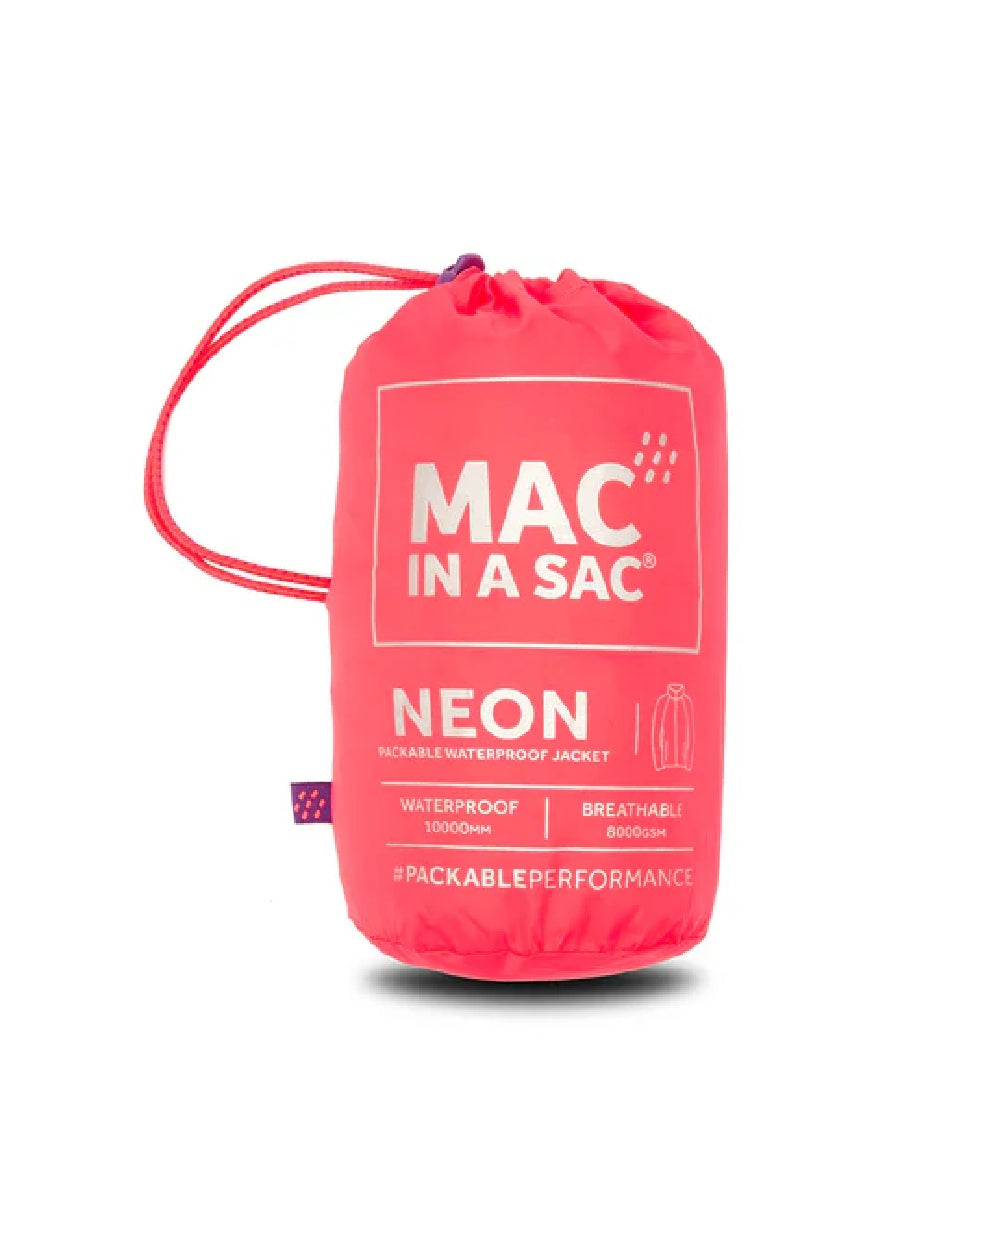 Neon Watermelon coloured Mac In A Sac Packable Origin Neon Waterproof Jacket on white background 